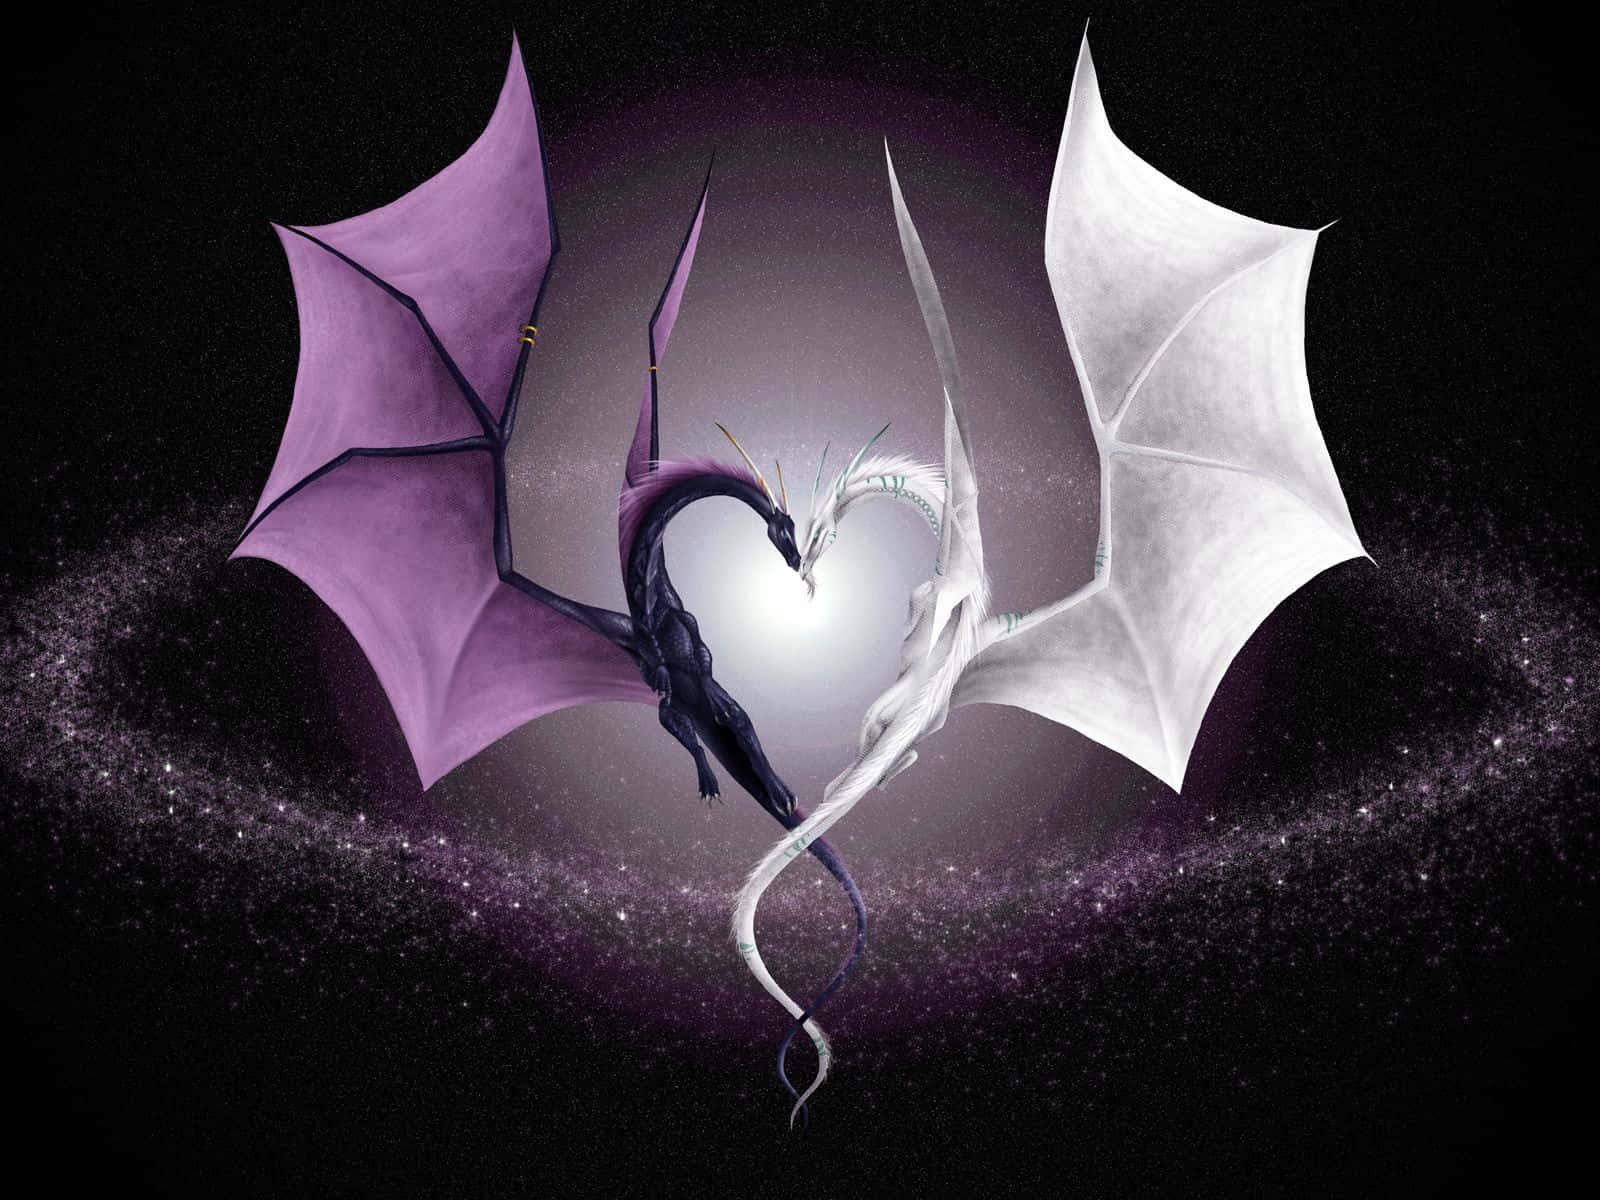 Dragonheart - Original Movie Poster